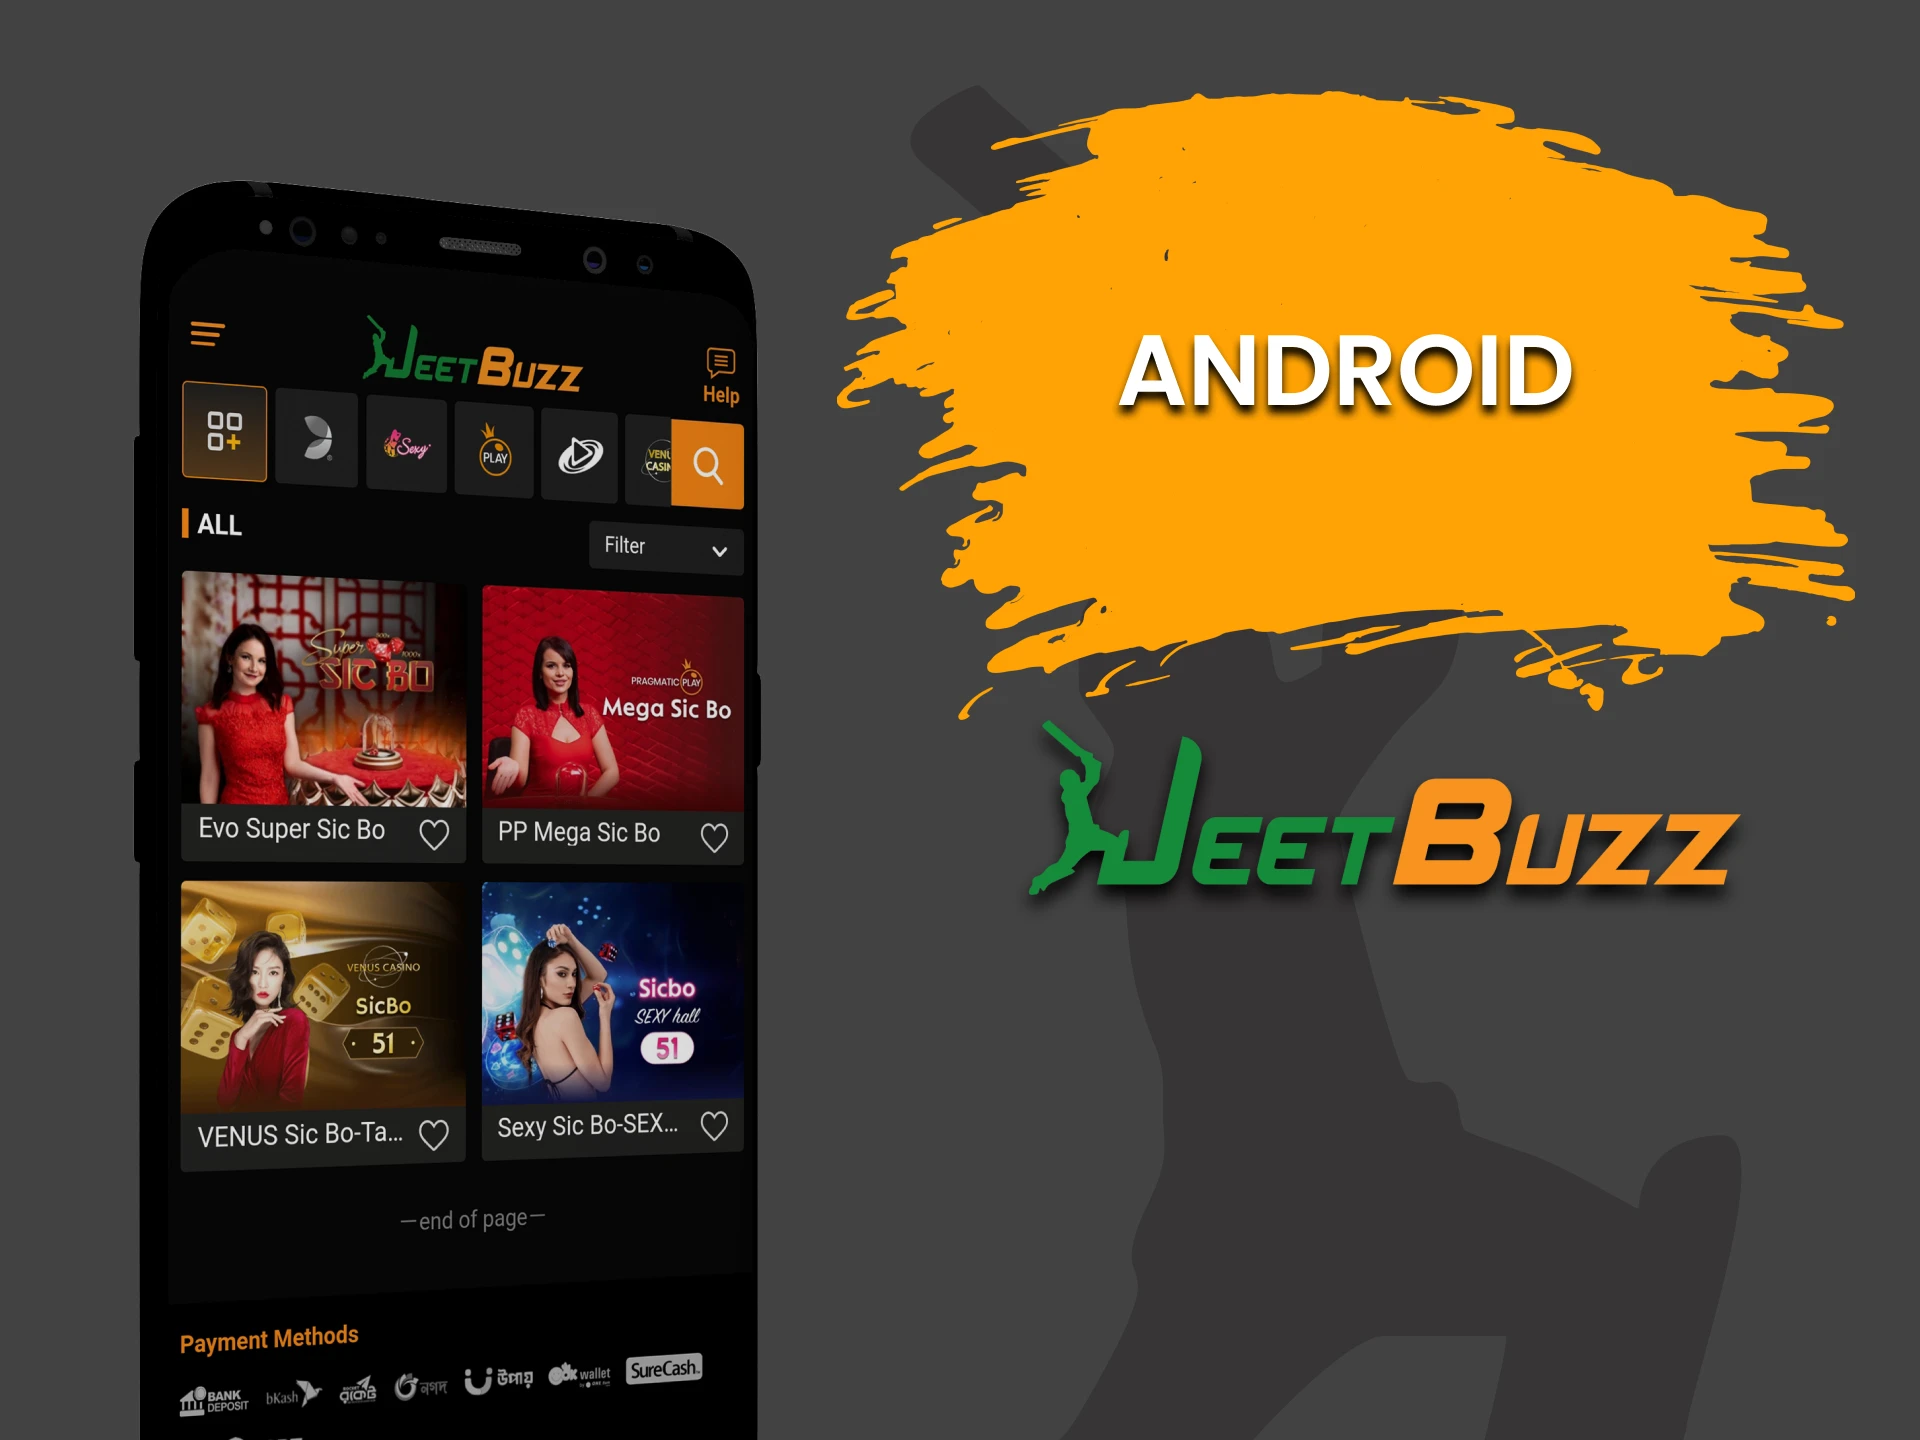 Play Sic Bo via Jeetbuzz app on Android.